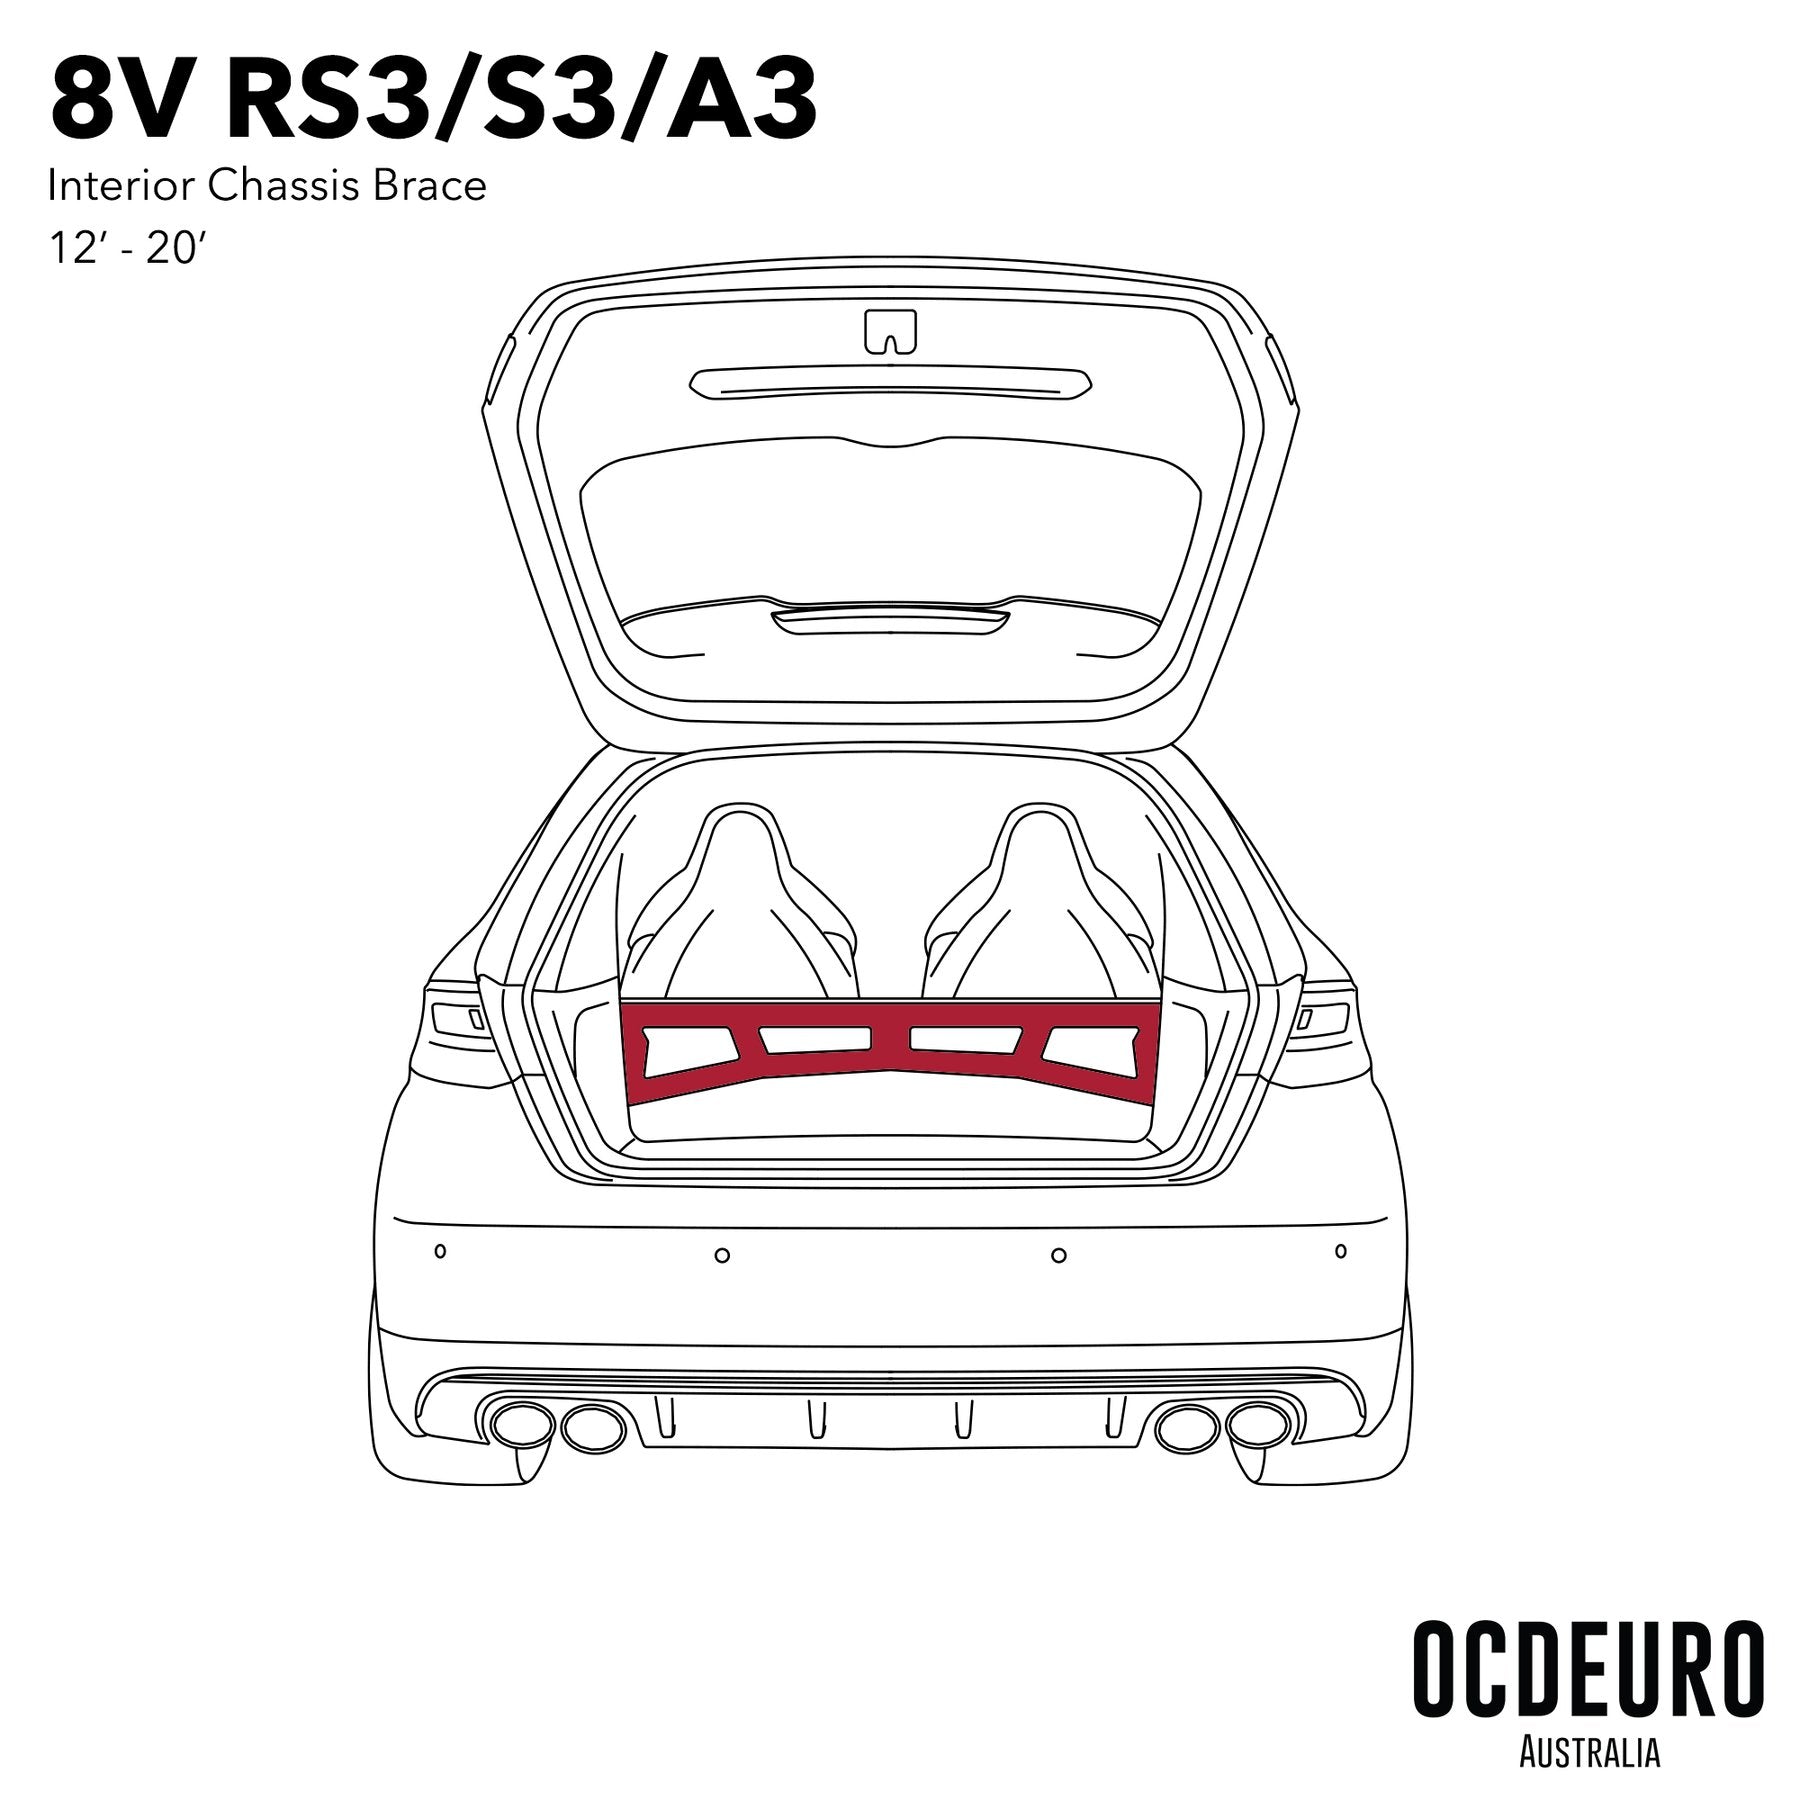 AUDI 8V RS3/S3/A3 HATCHBACK INTERIOR CHASSIS BRACE - Berg Auto Design